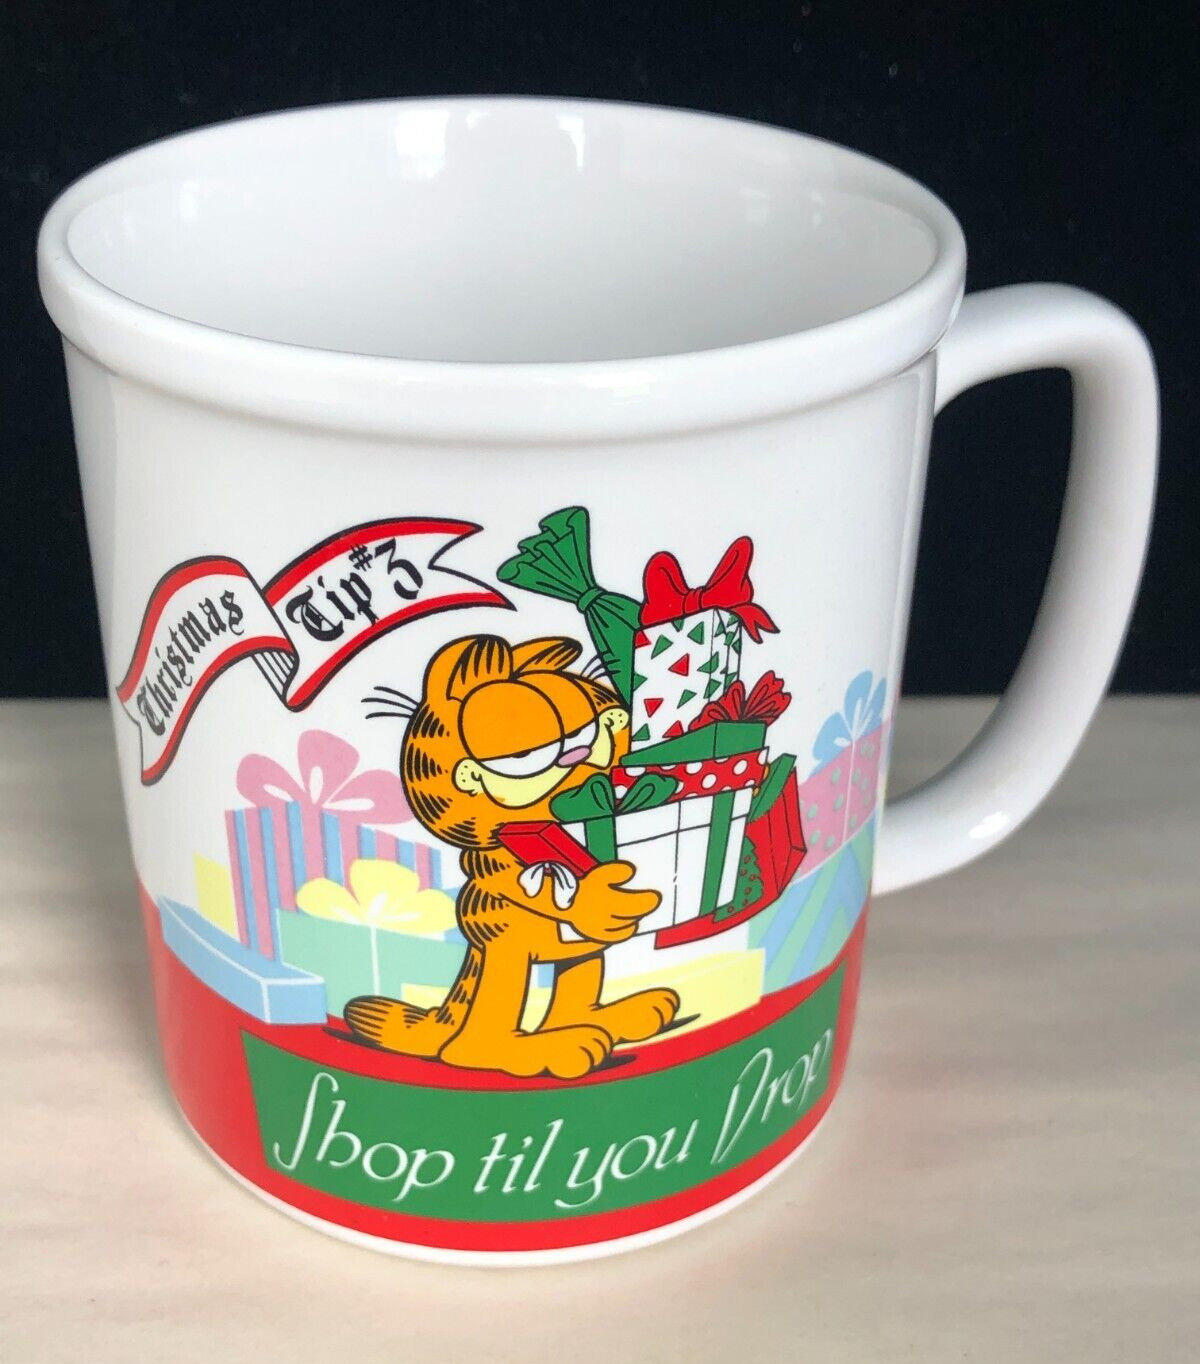 Vintage Garfield's Christmas Tip #3 Shop til you Drop Mug - 1978 - ENESCO